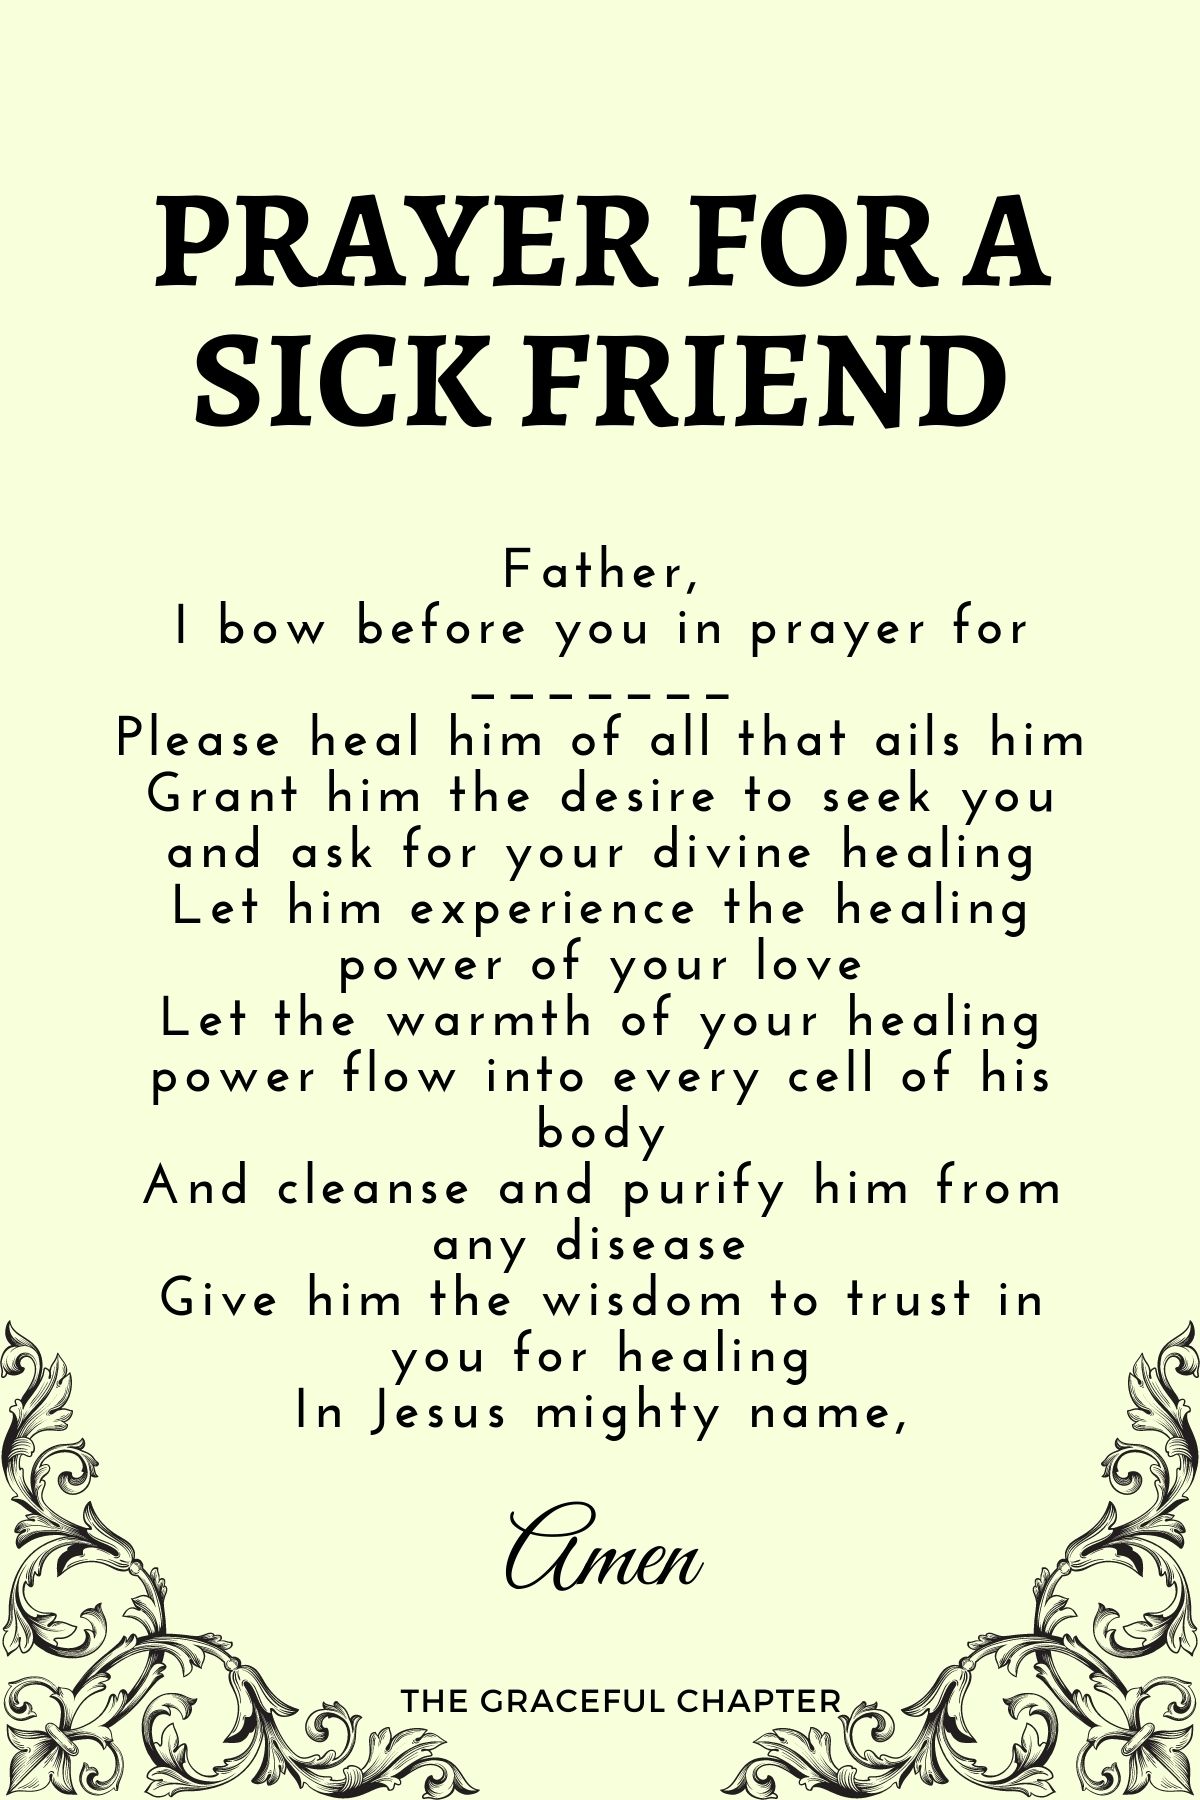 Prayer for a sick friend